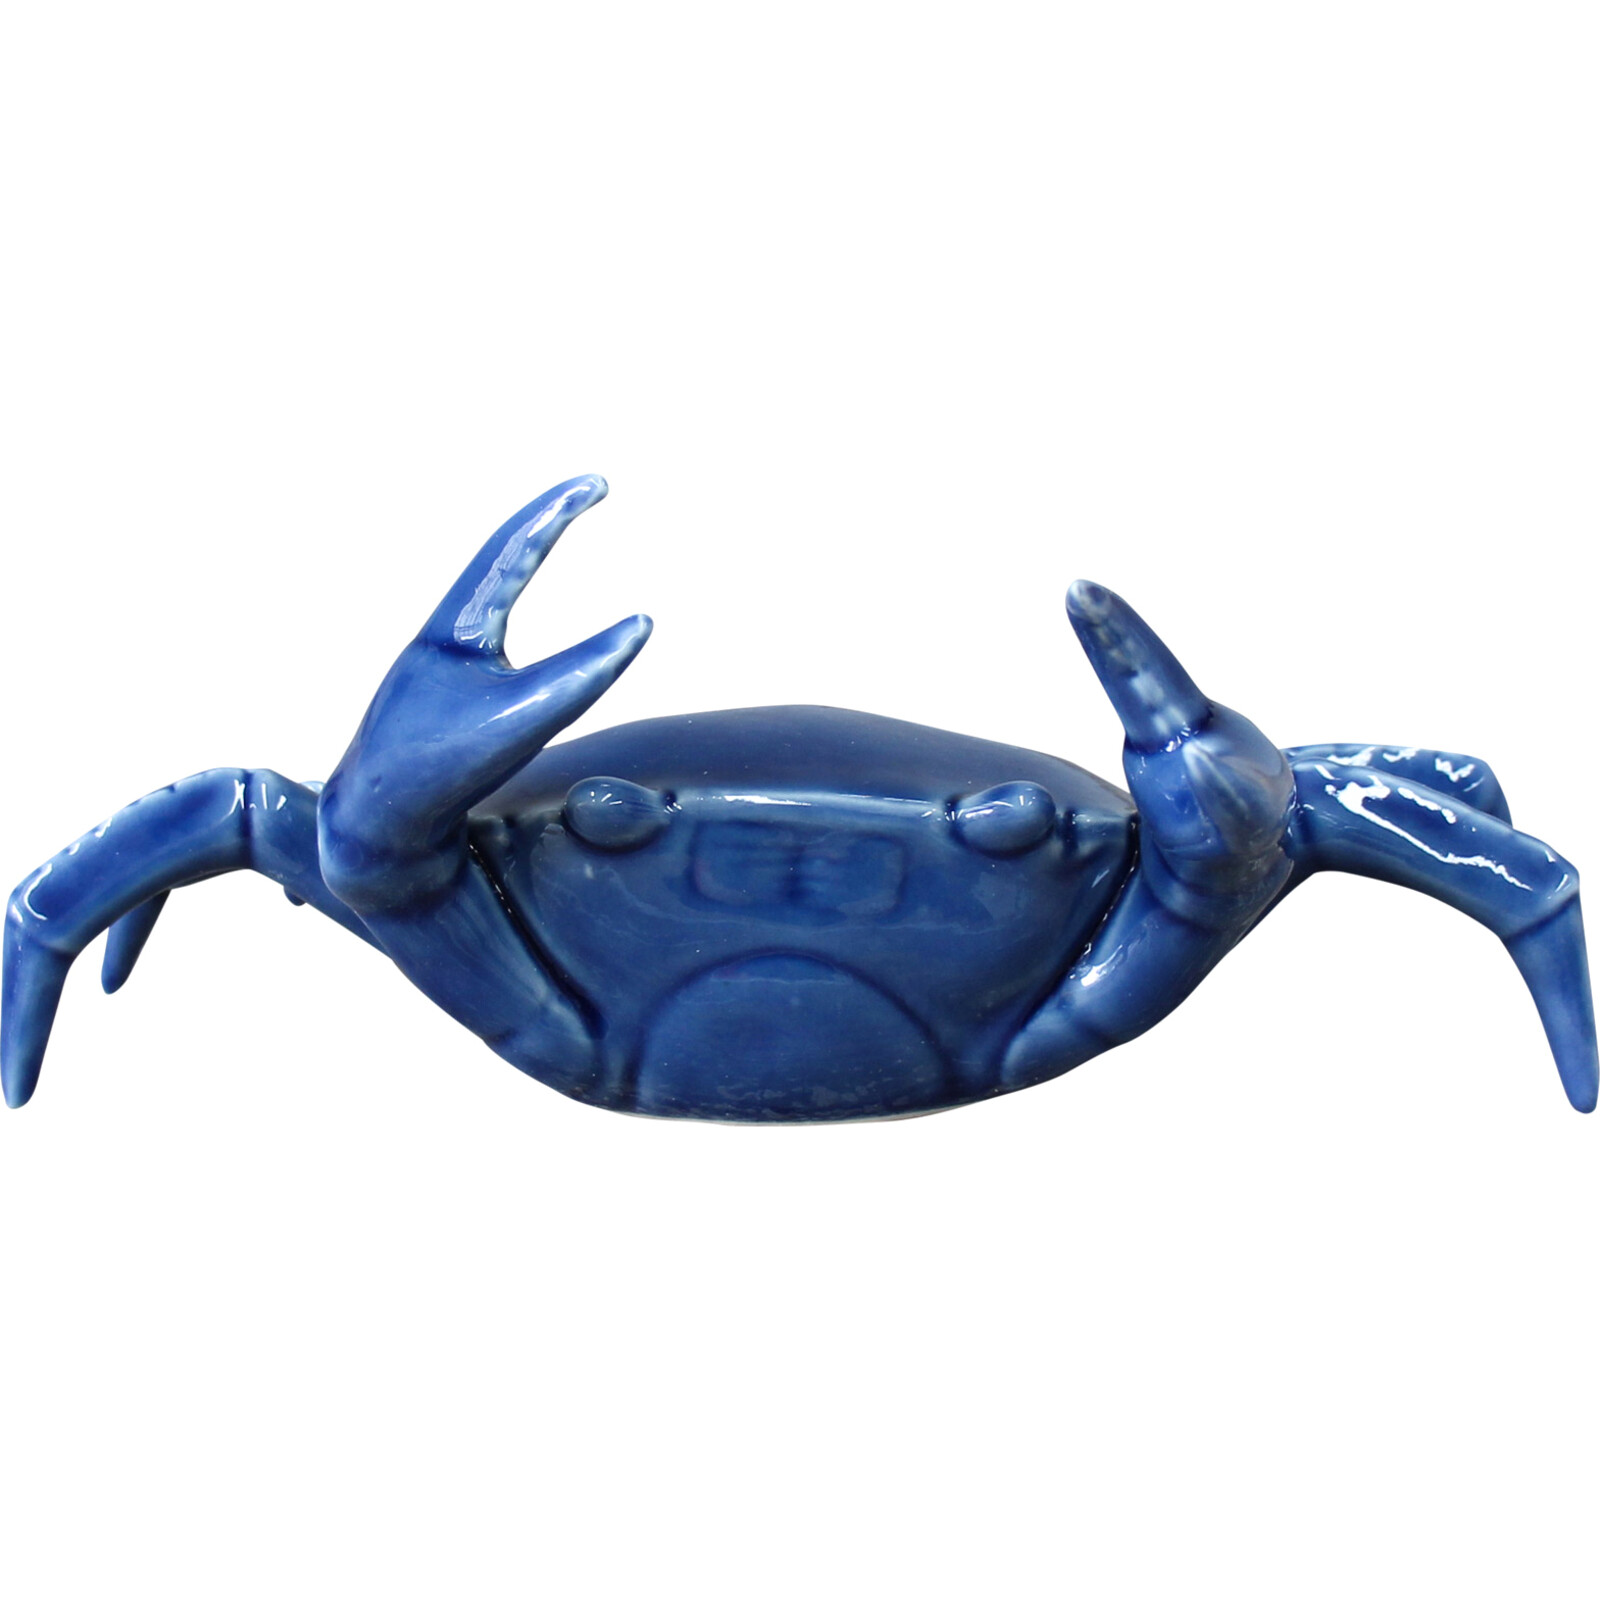 Crab Decor Scuttle Blue